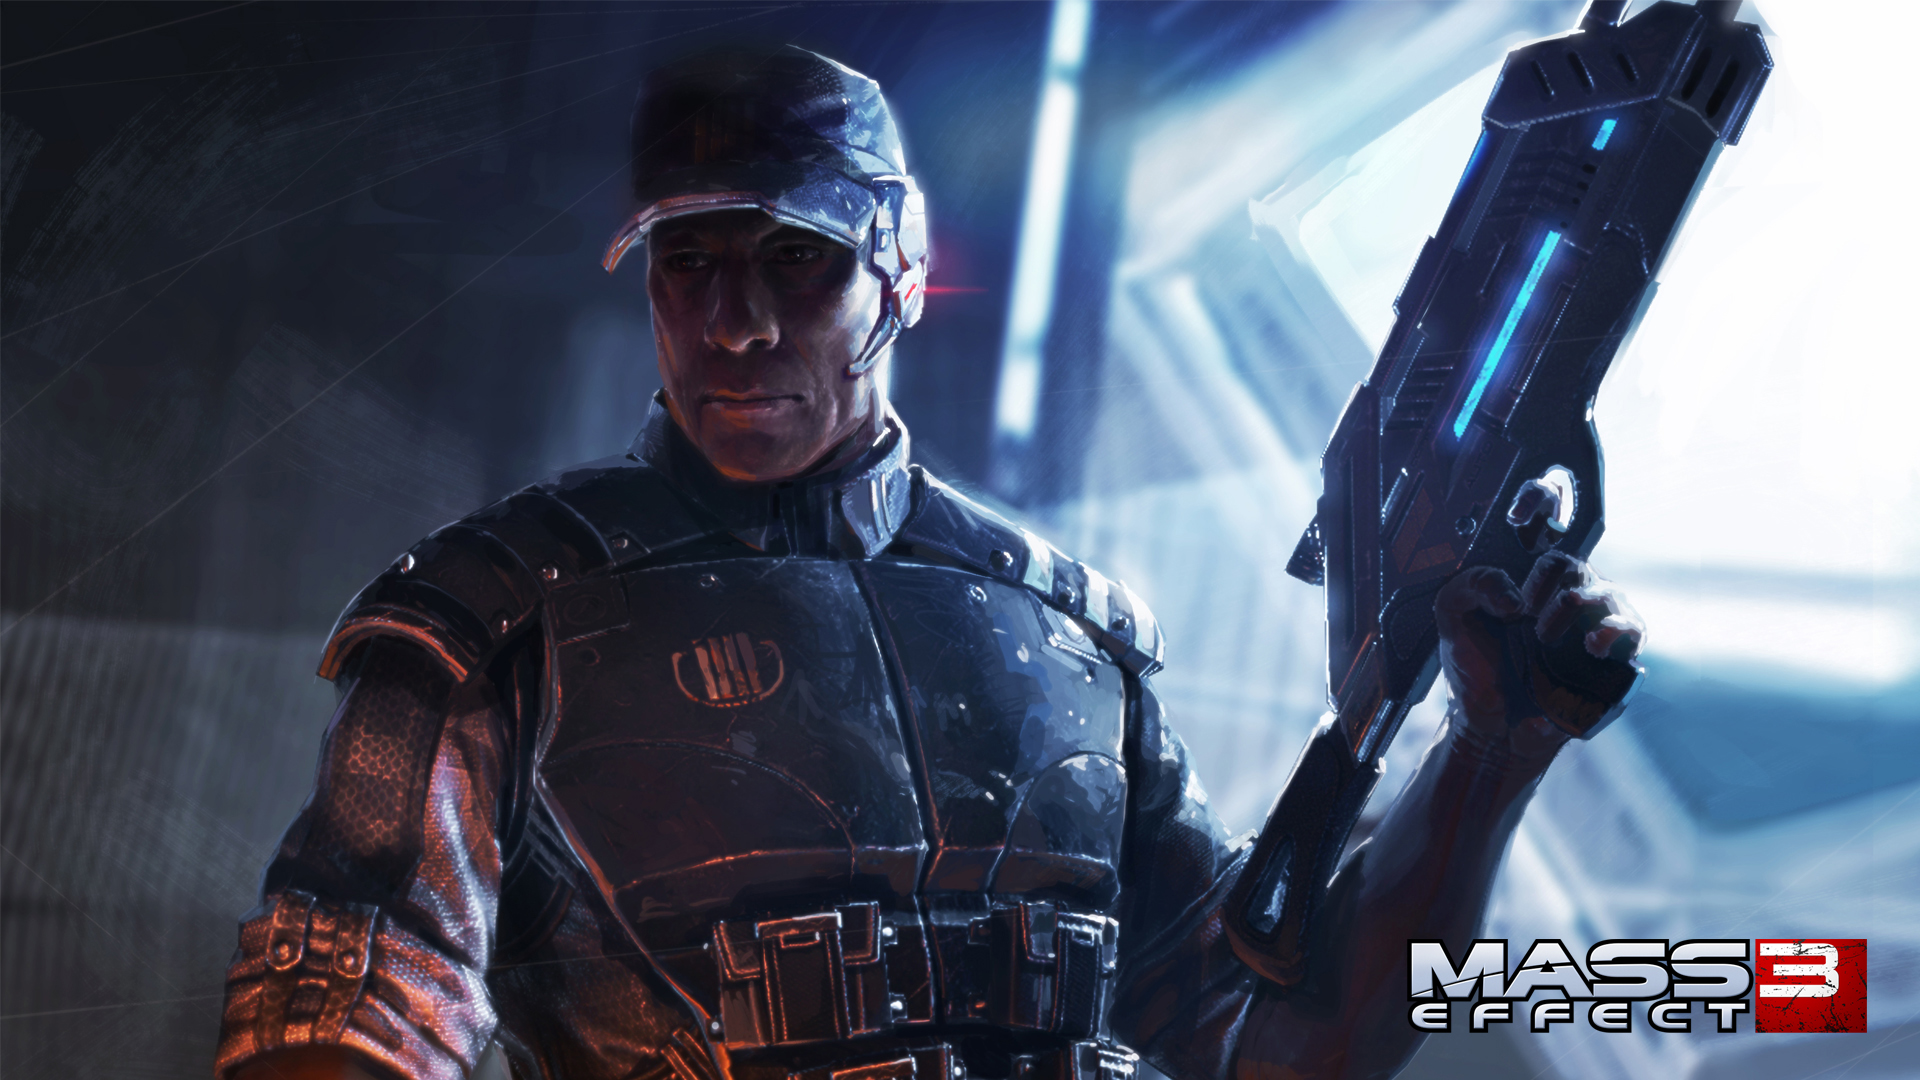 Mass Effect 3, Electronic Arts - Xbox 360 - image 4 of 22